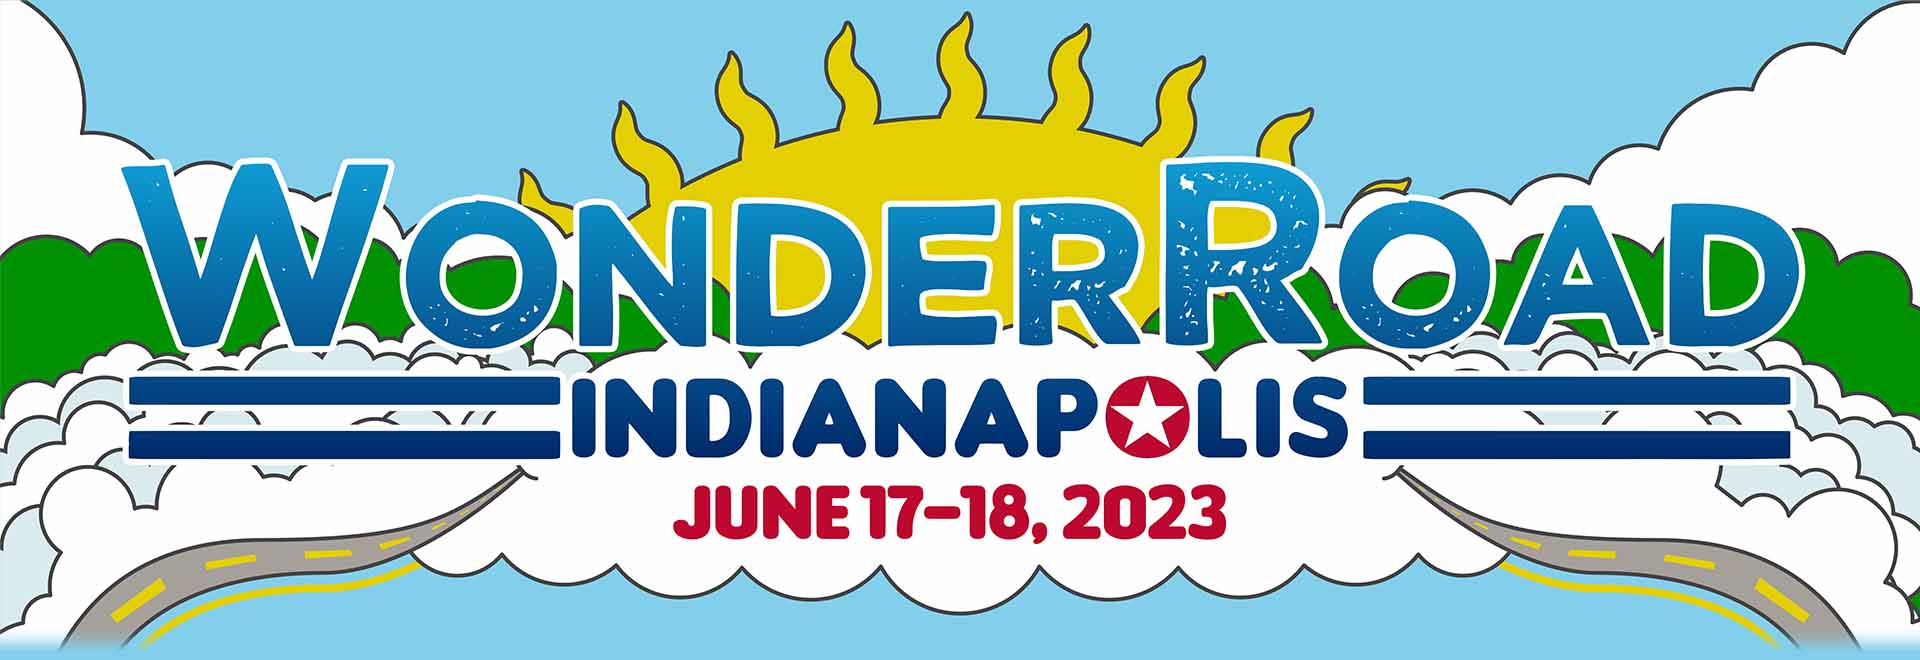 Music & Arts Festival Indianapolis, June 1718, 2023 WonderRoad